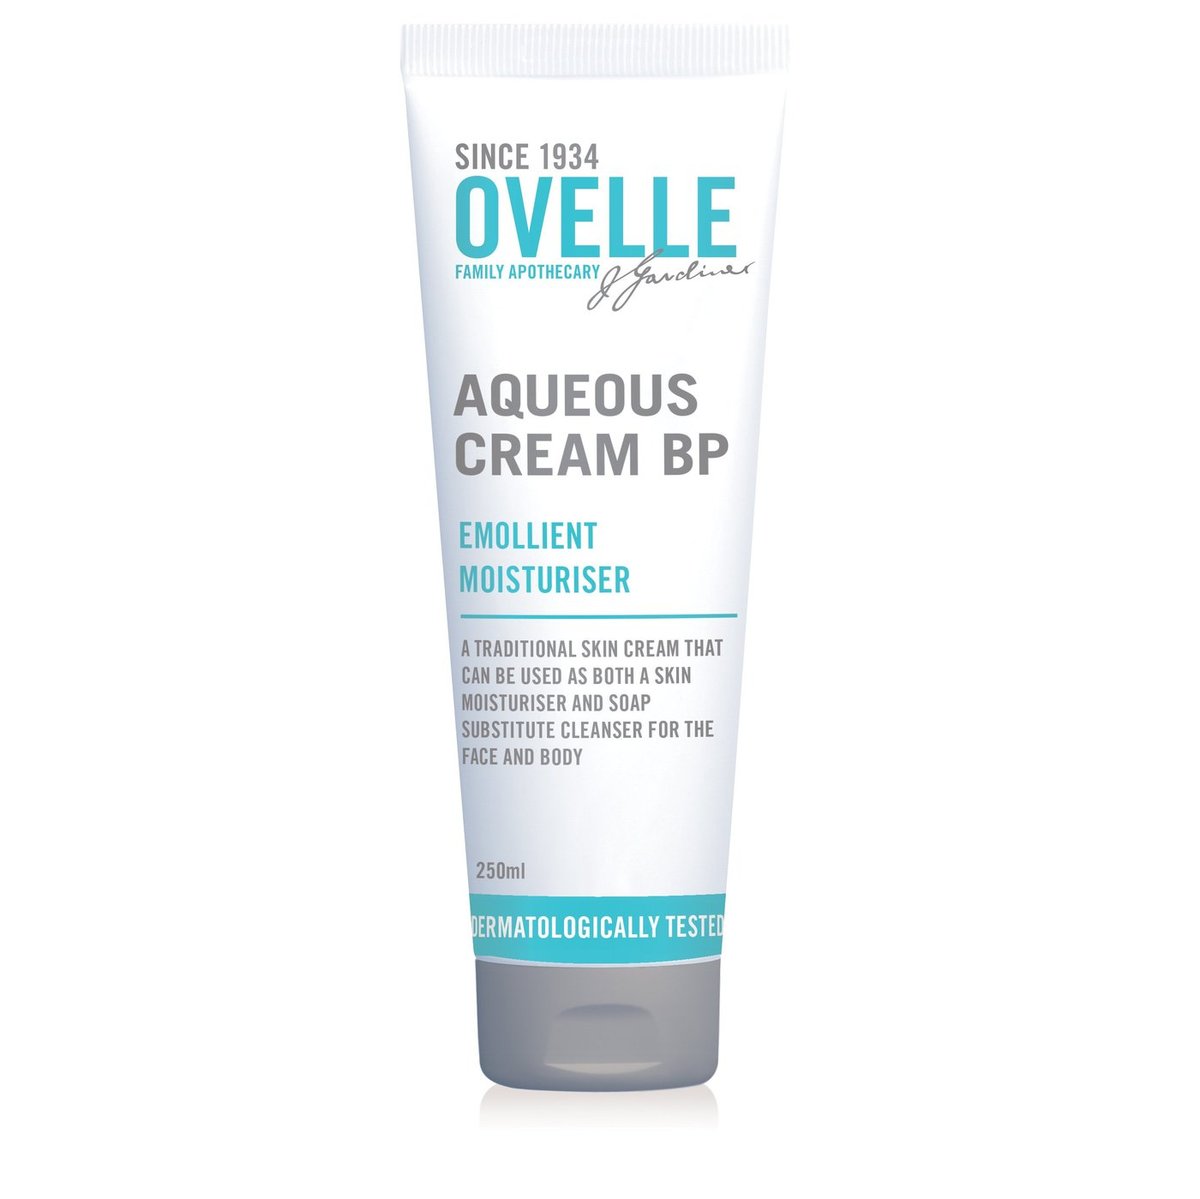 Ovelle Aqueous Cream For Eczema & Dry Skin - 250ml